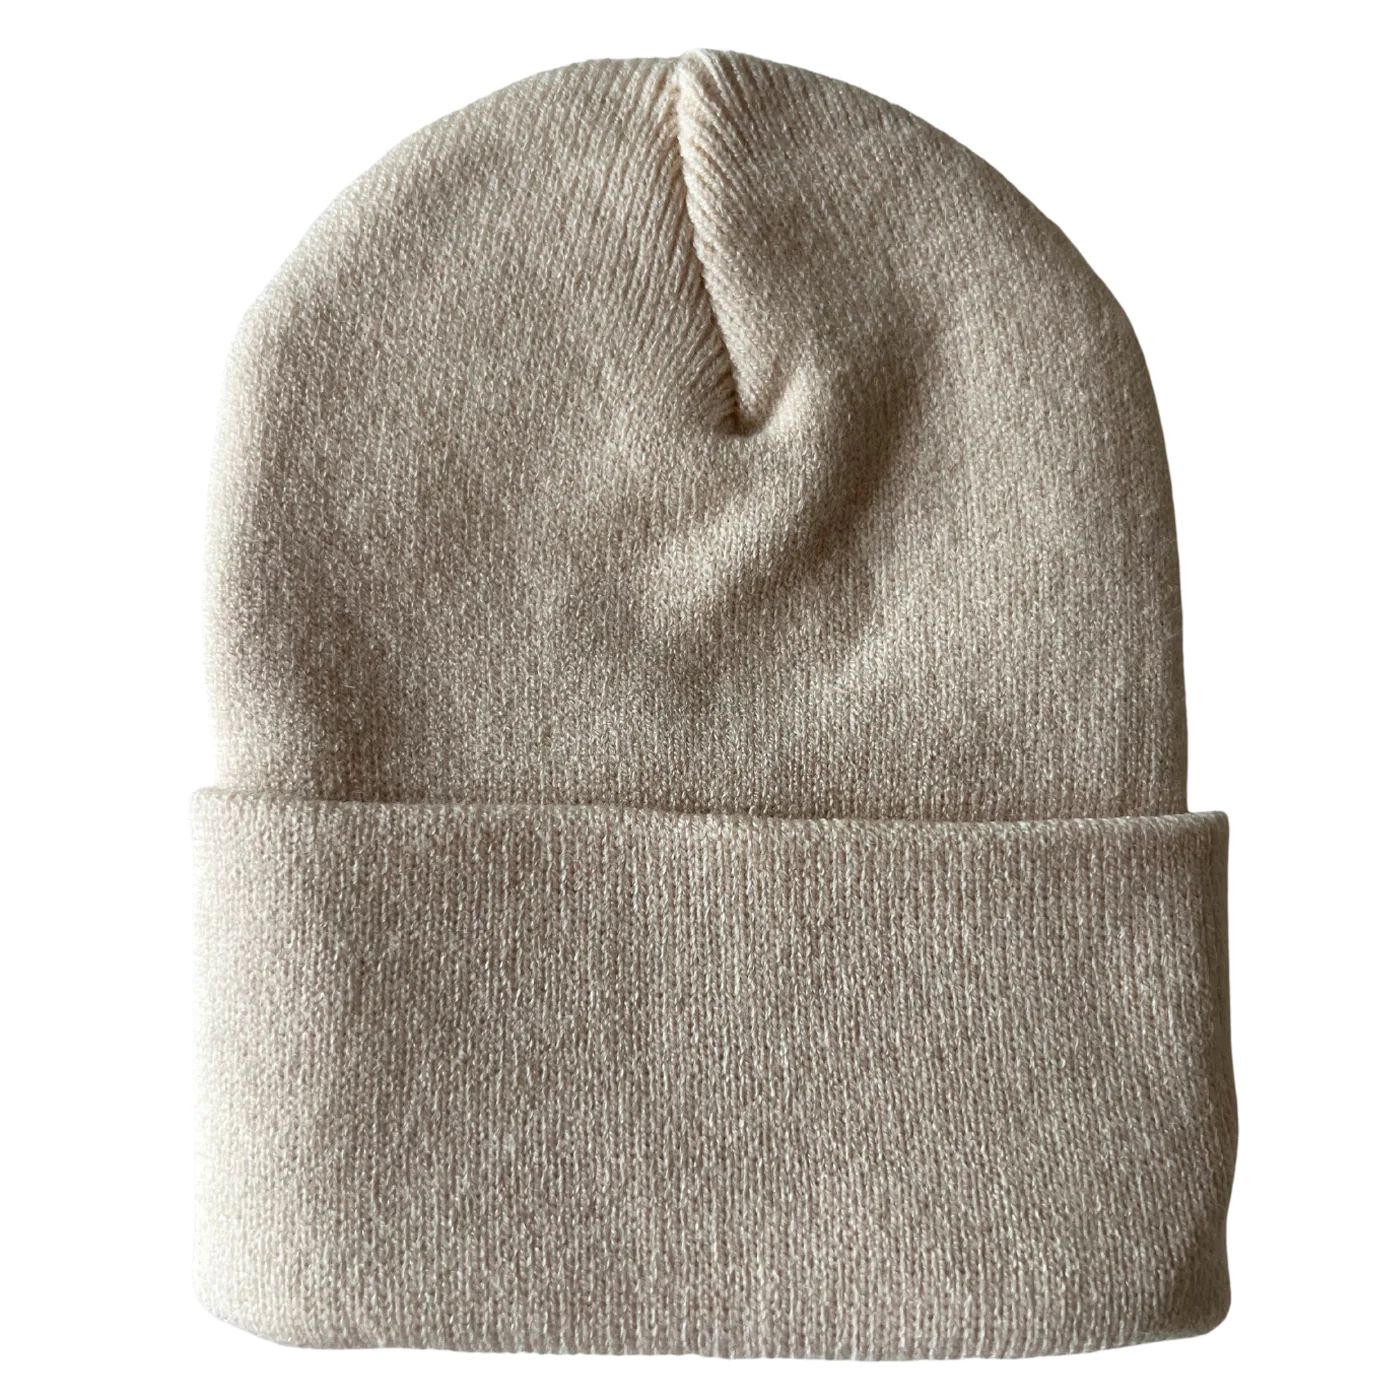 Baby's First Hat, Sand | SpearmintLOVE